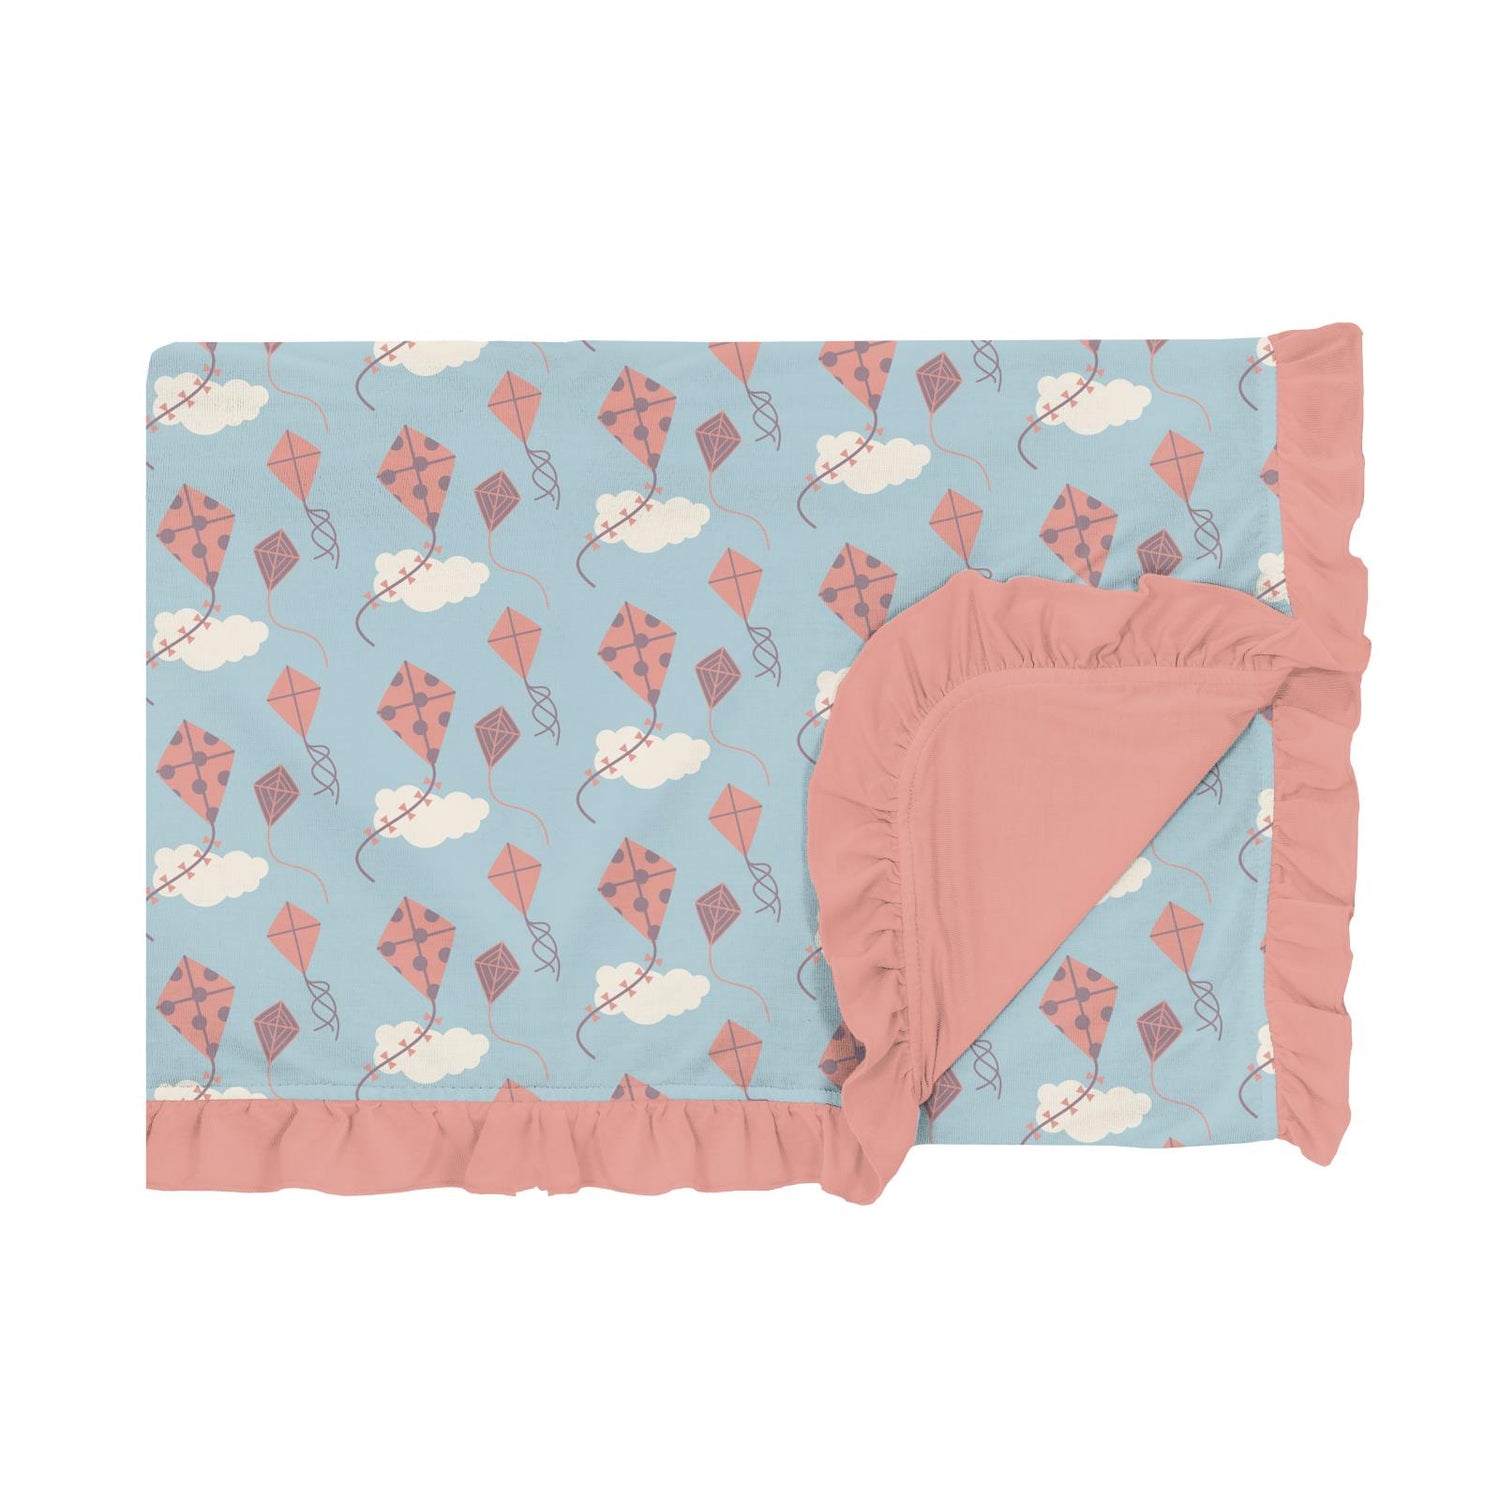 Print Ruffle Toddler Blanket in Spring Day Kites